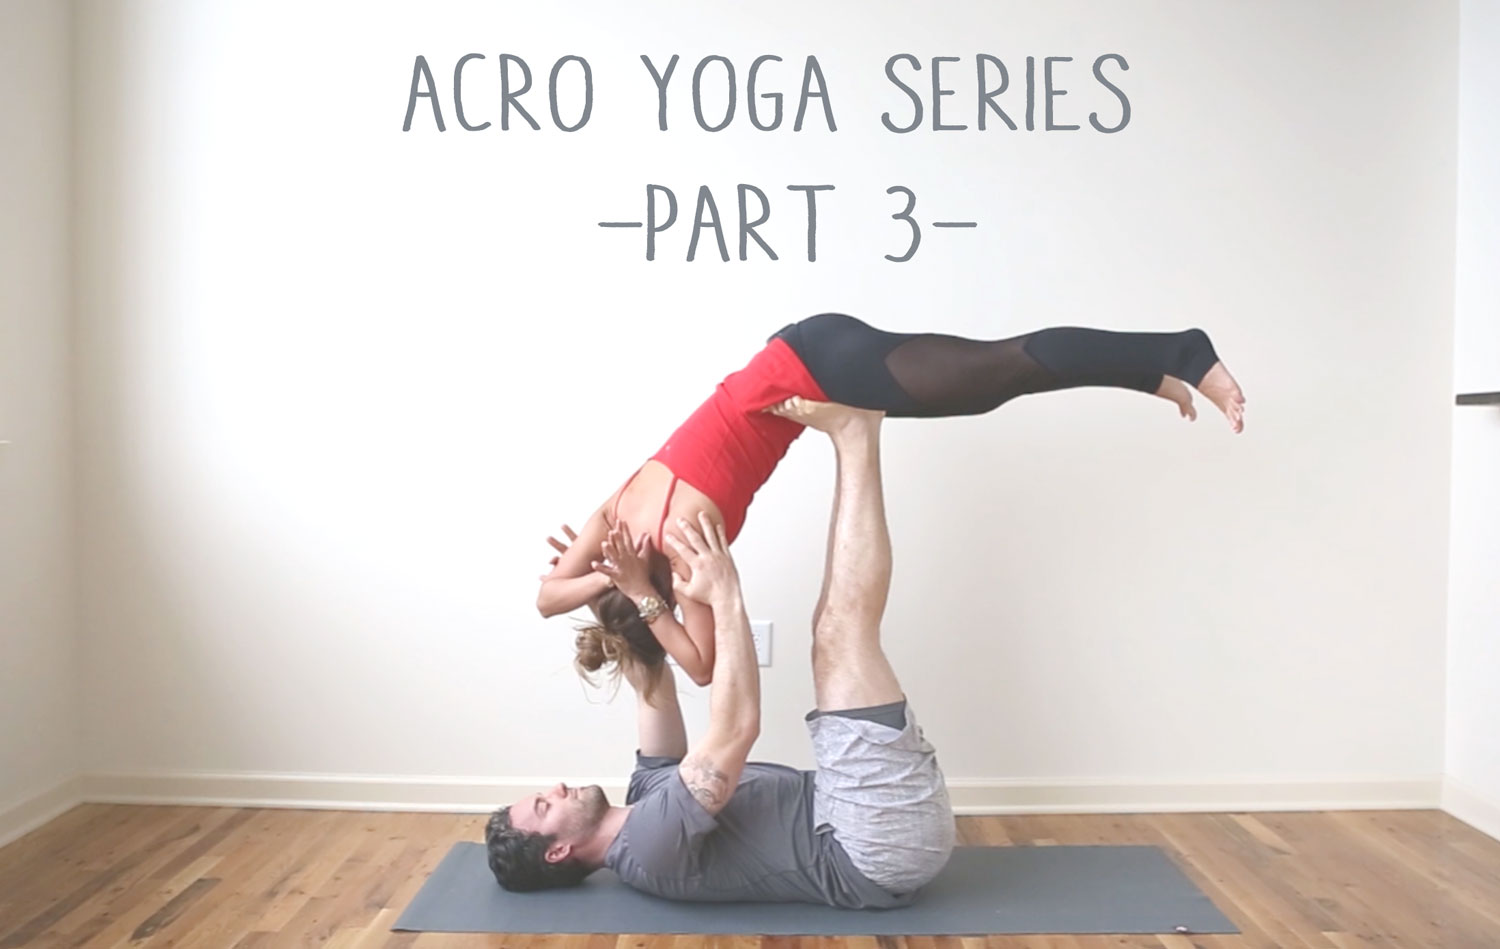 4 Simple Acrobatic Yoga Poses for Beginners | LoveToKnow Health & Wellness